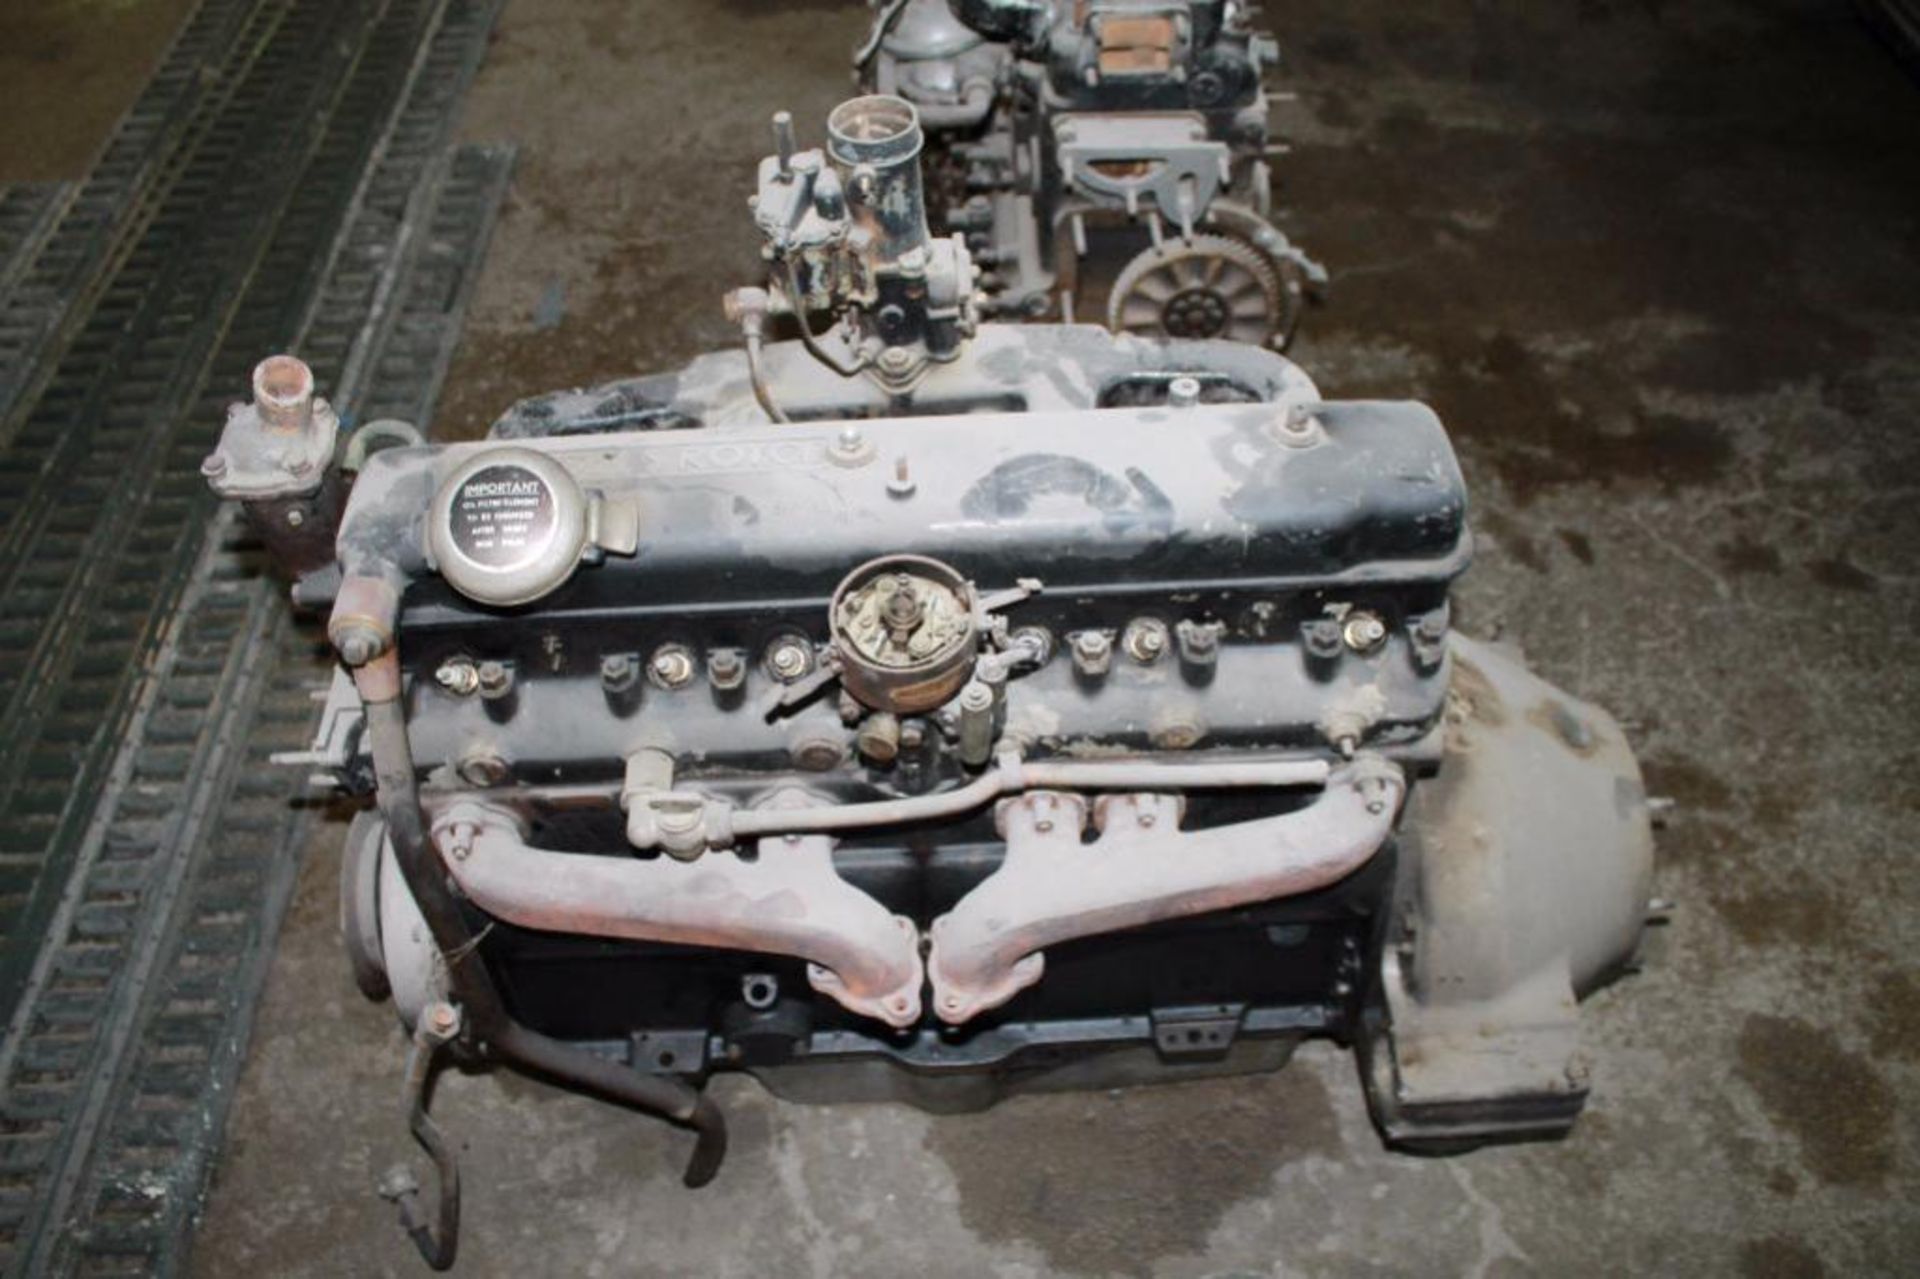 Rolls Royce Motor - Image 2 of 2